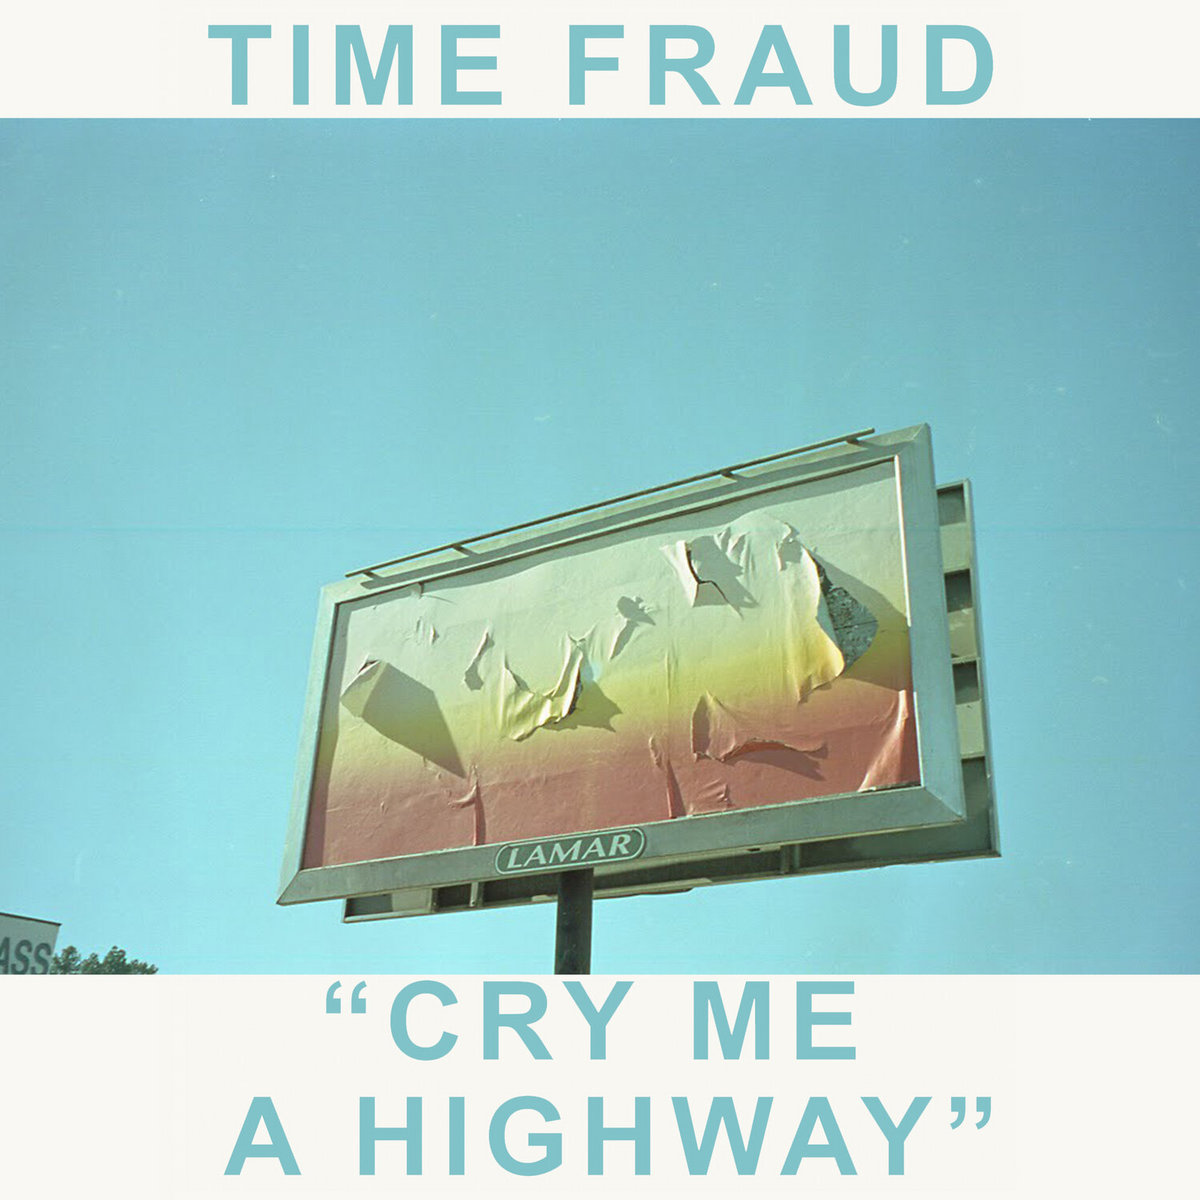 time fraud cry me a highway album art, photo of peeling billboard against blue sky